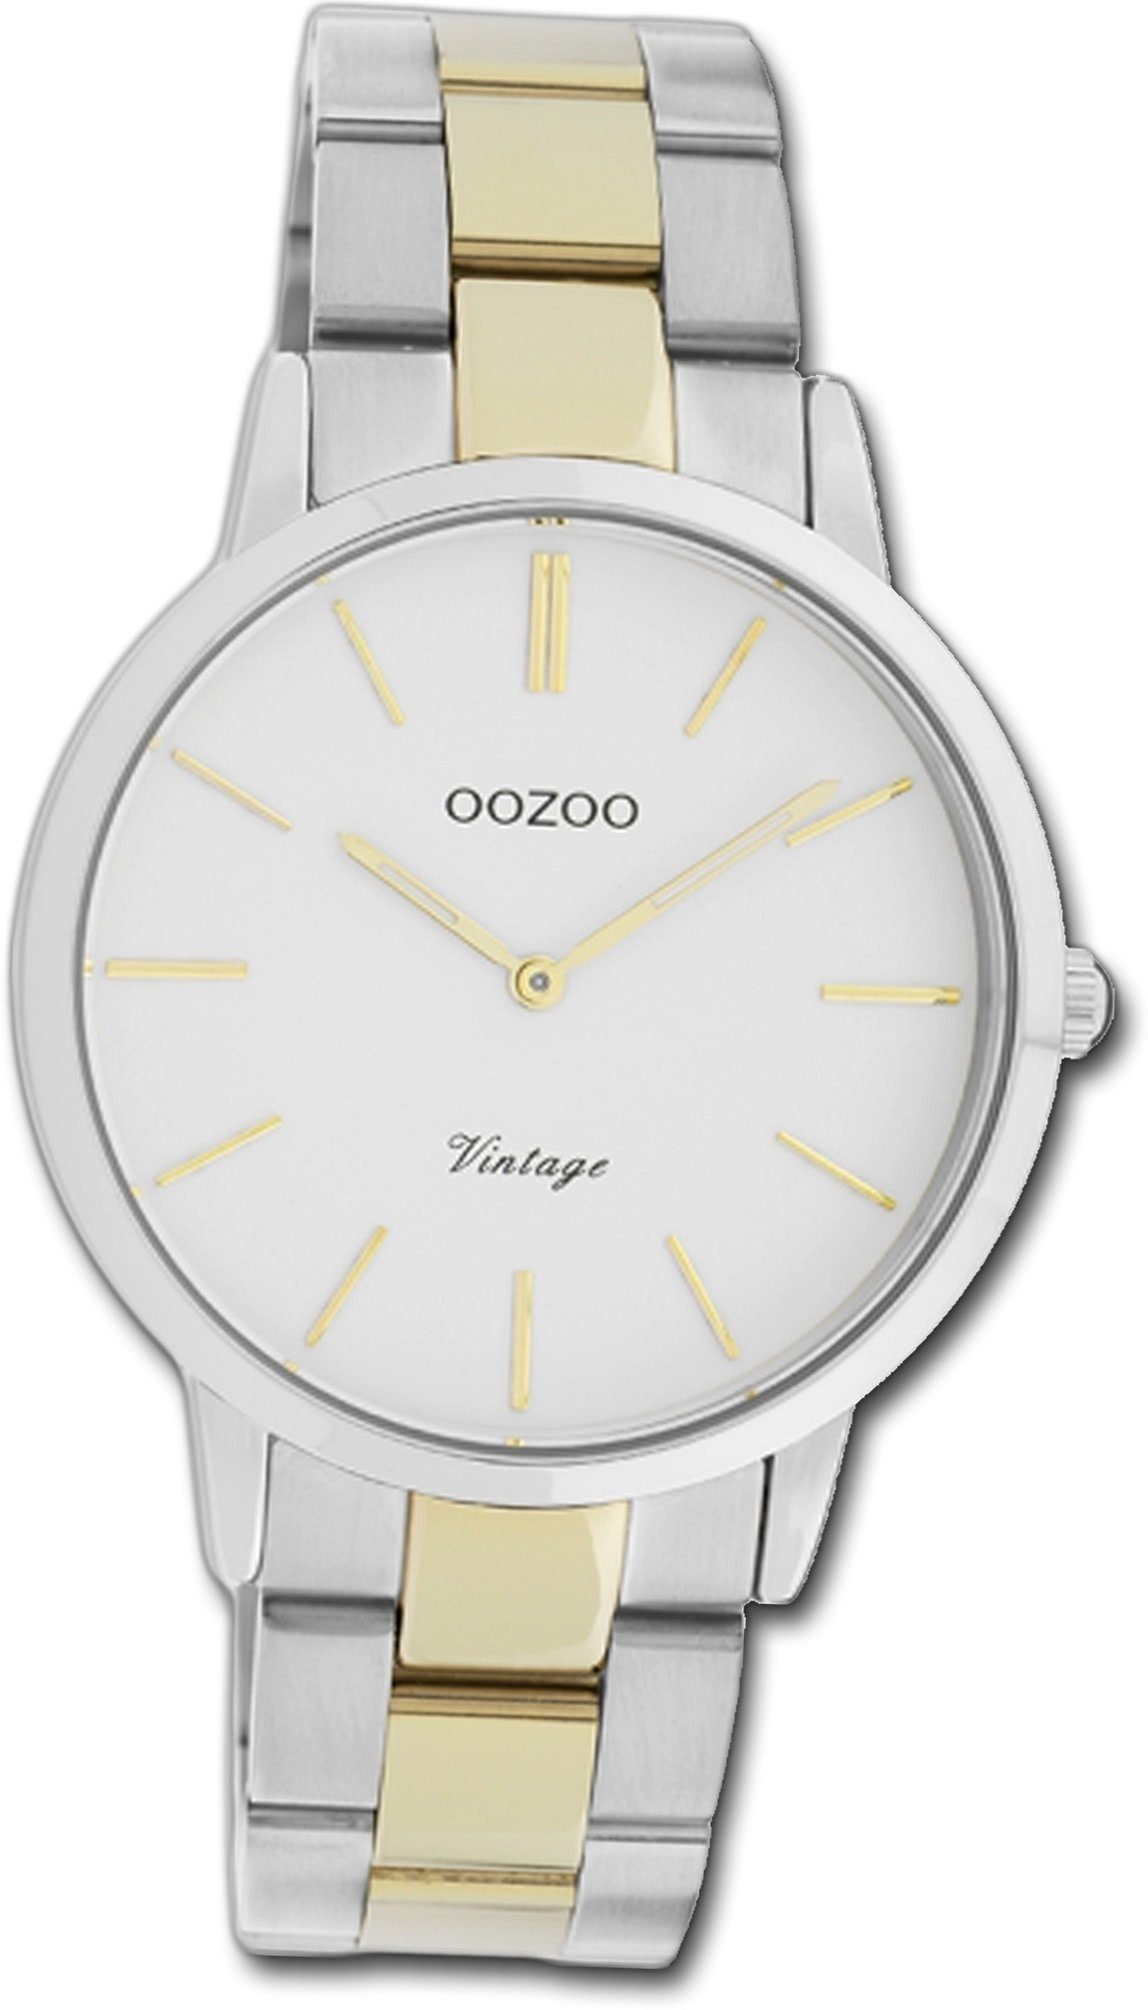 OOZOO Edelstahl Oozoo Gehäuse, Damen Damenuhr Uhr C20032, (38mm) mittel gold, silber, rundes Quarzuhr Edelstahlarmband